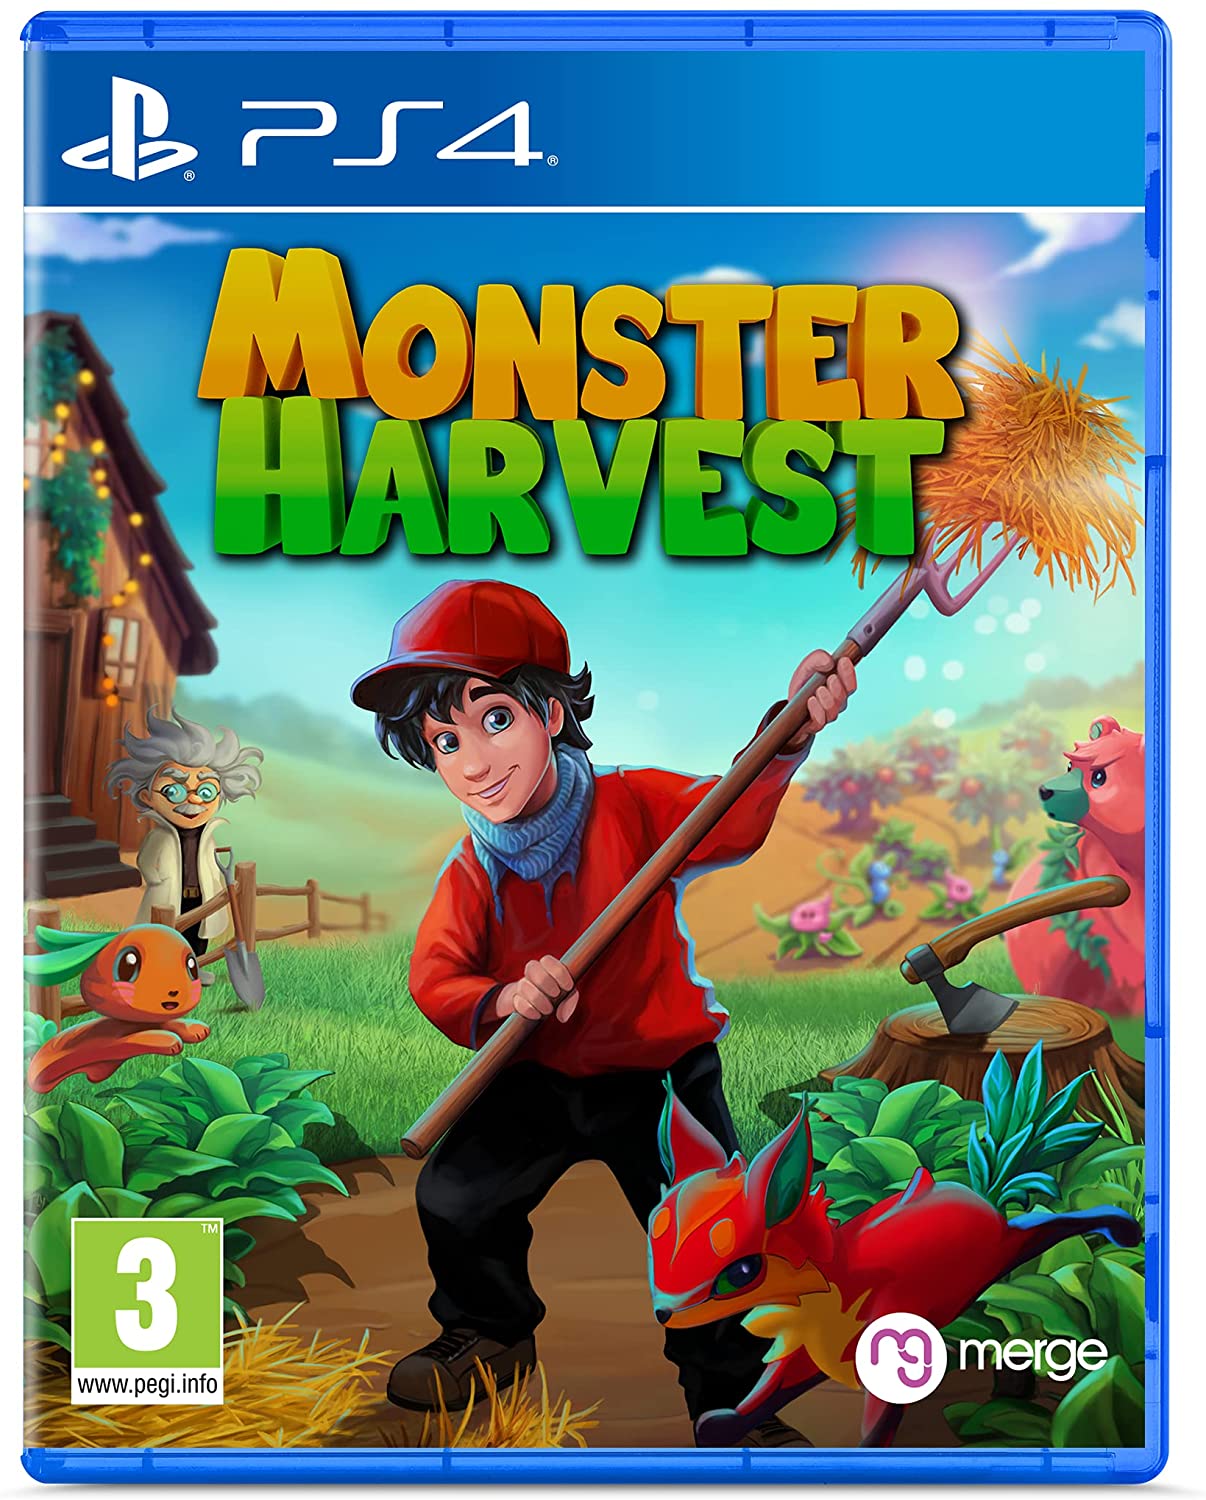 Monster Harvest (PS4), Merge Games